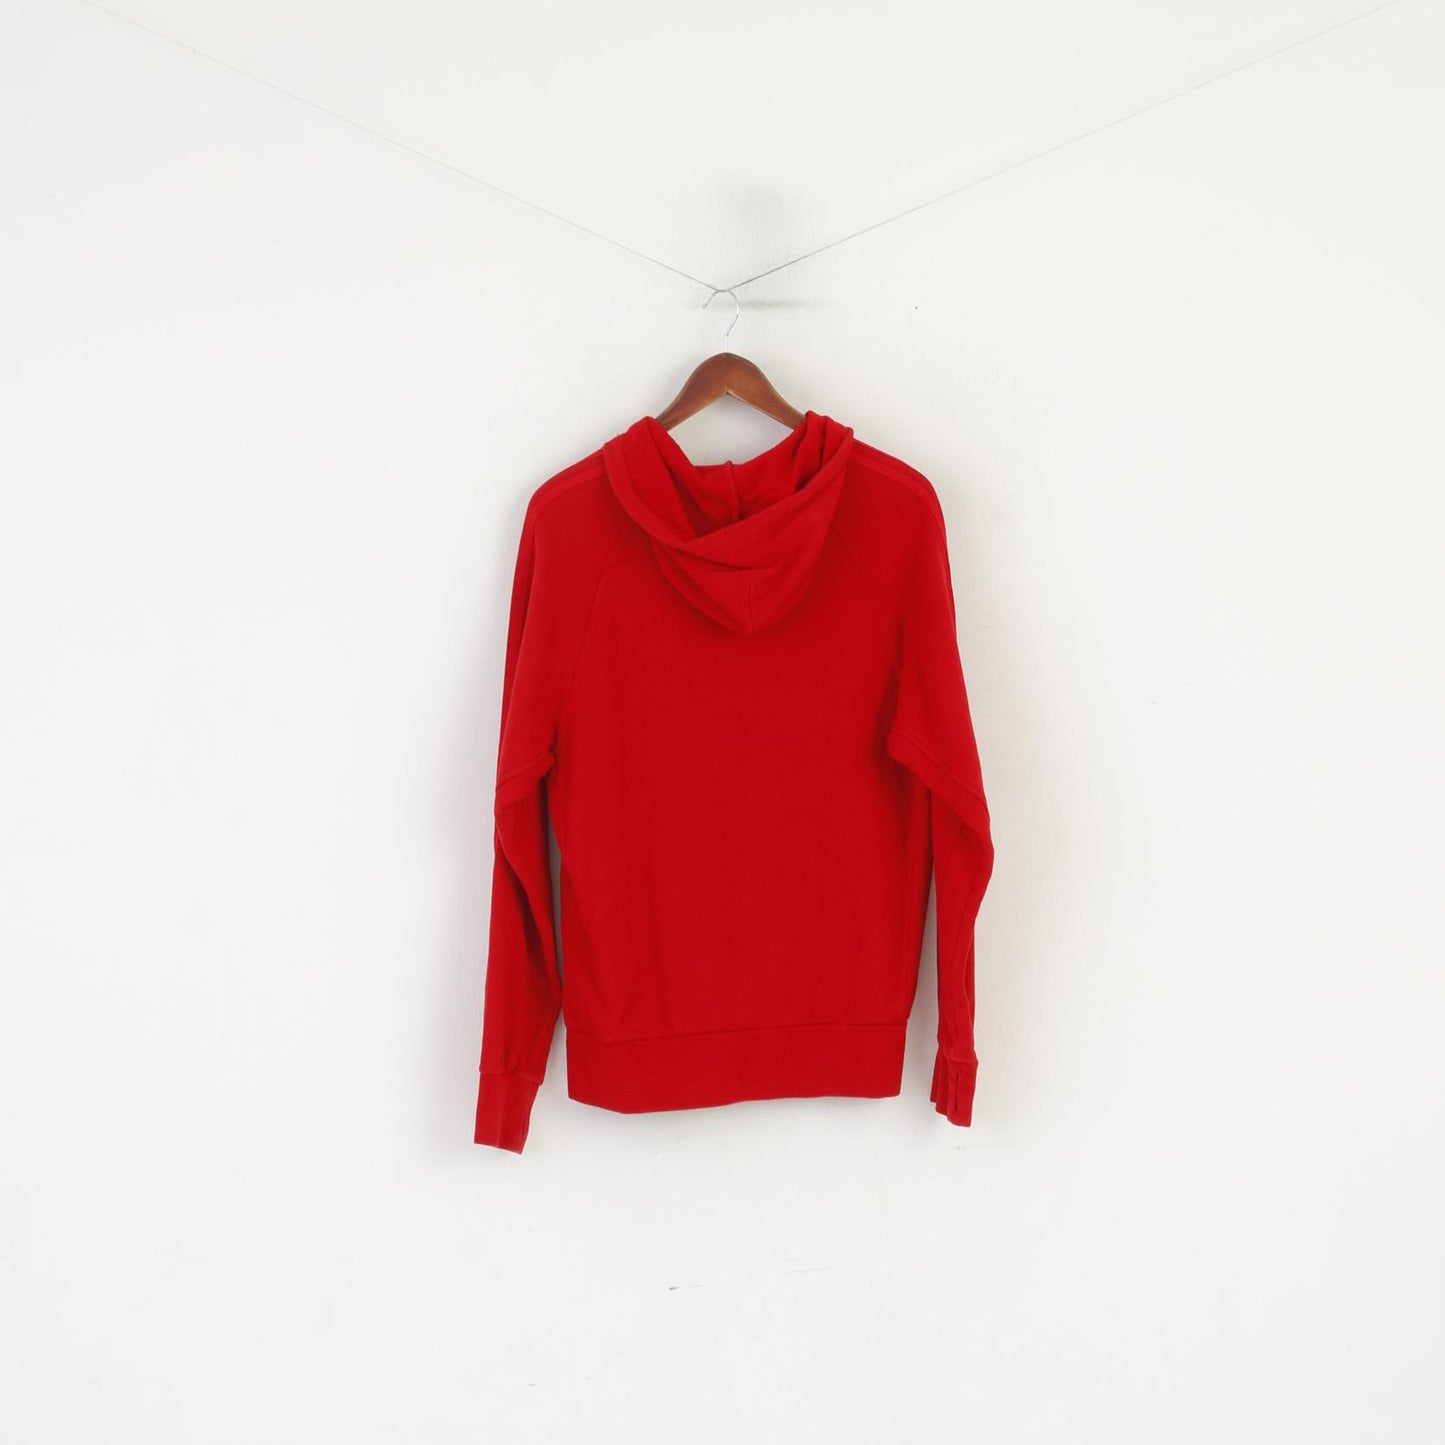 Adidas Women M Sweatshirt Red Cotton Kangaroo Pocket Hooded Oversize Sport Top